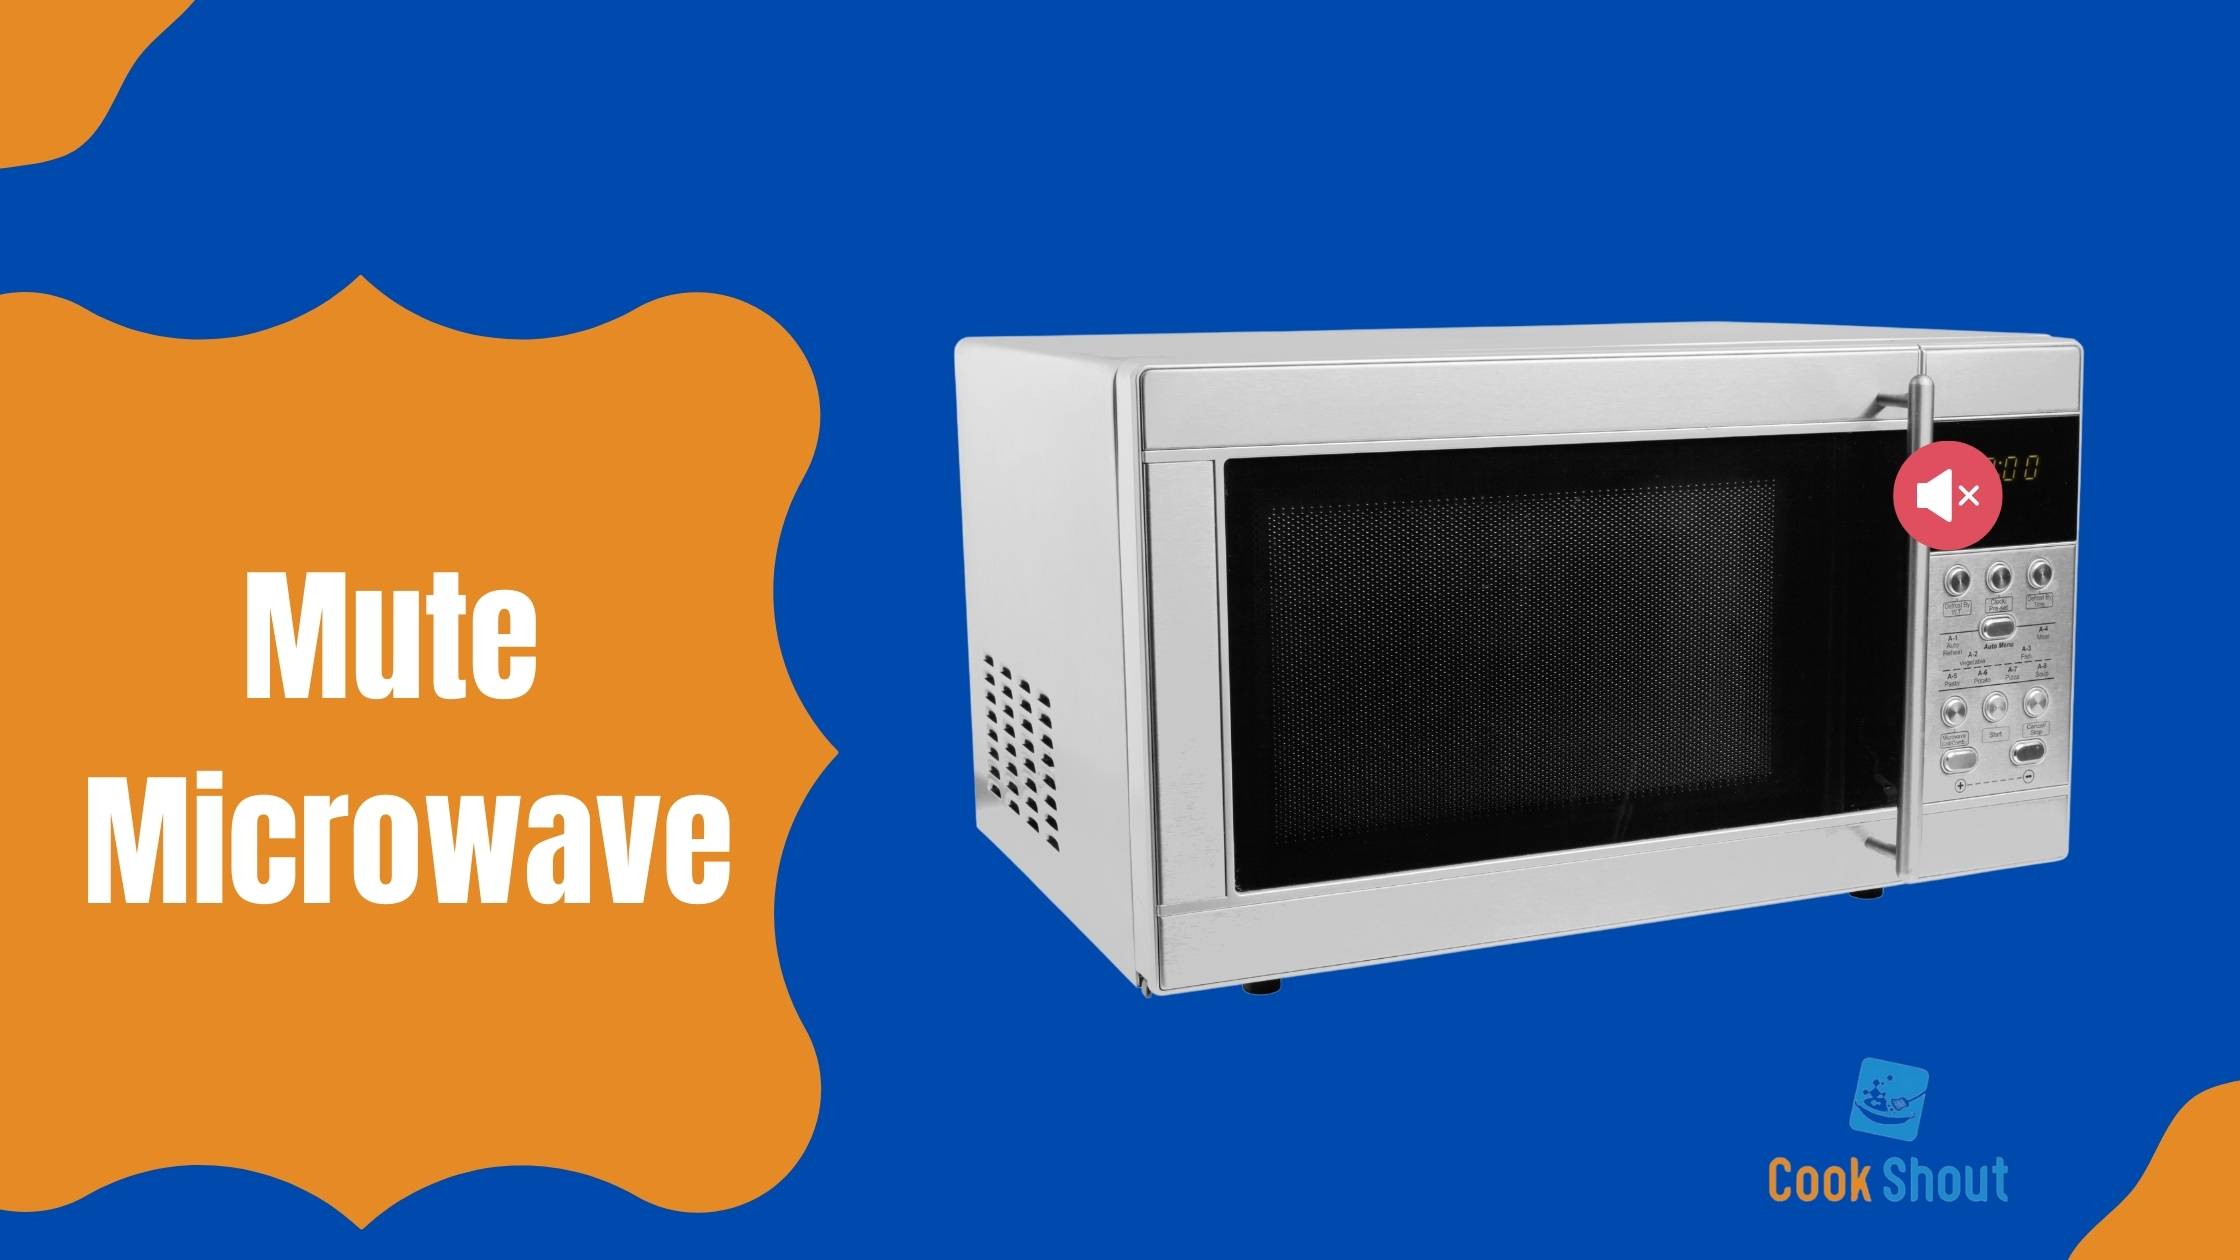 Mute Microwave